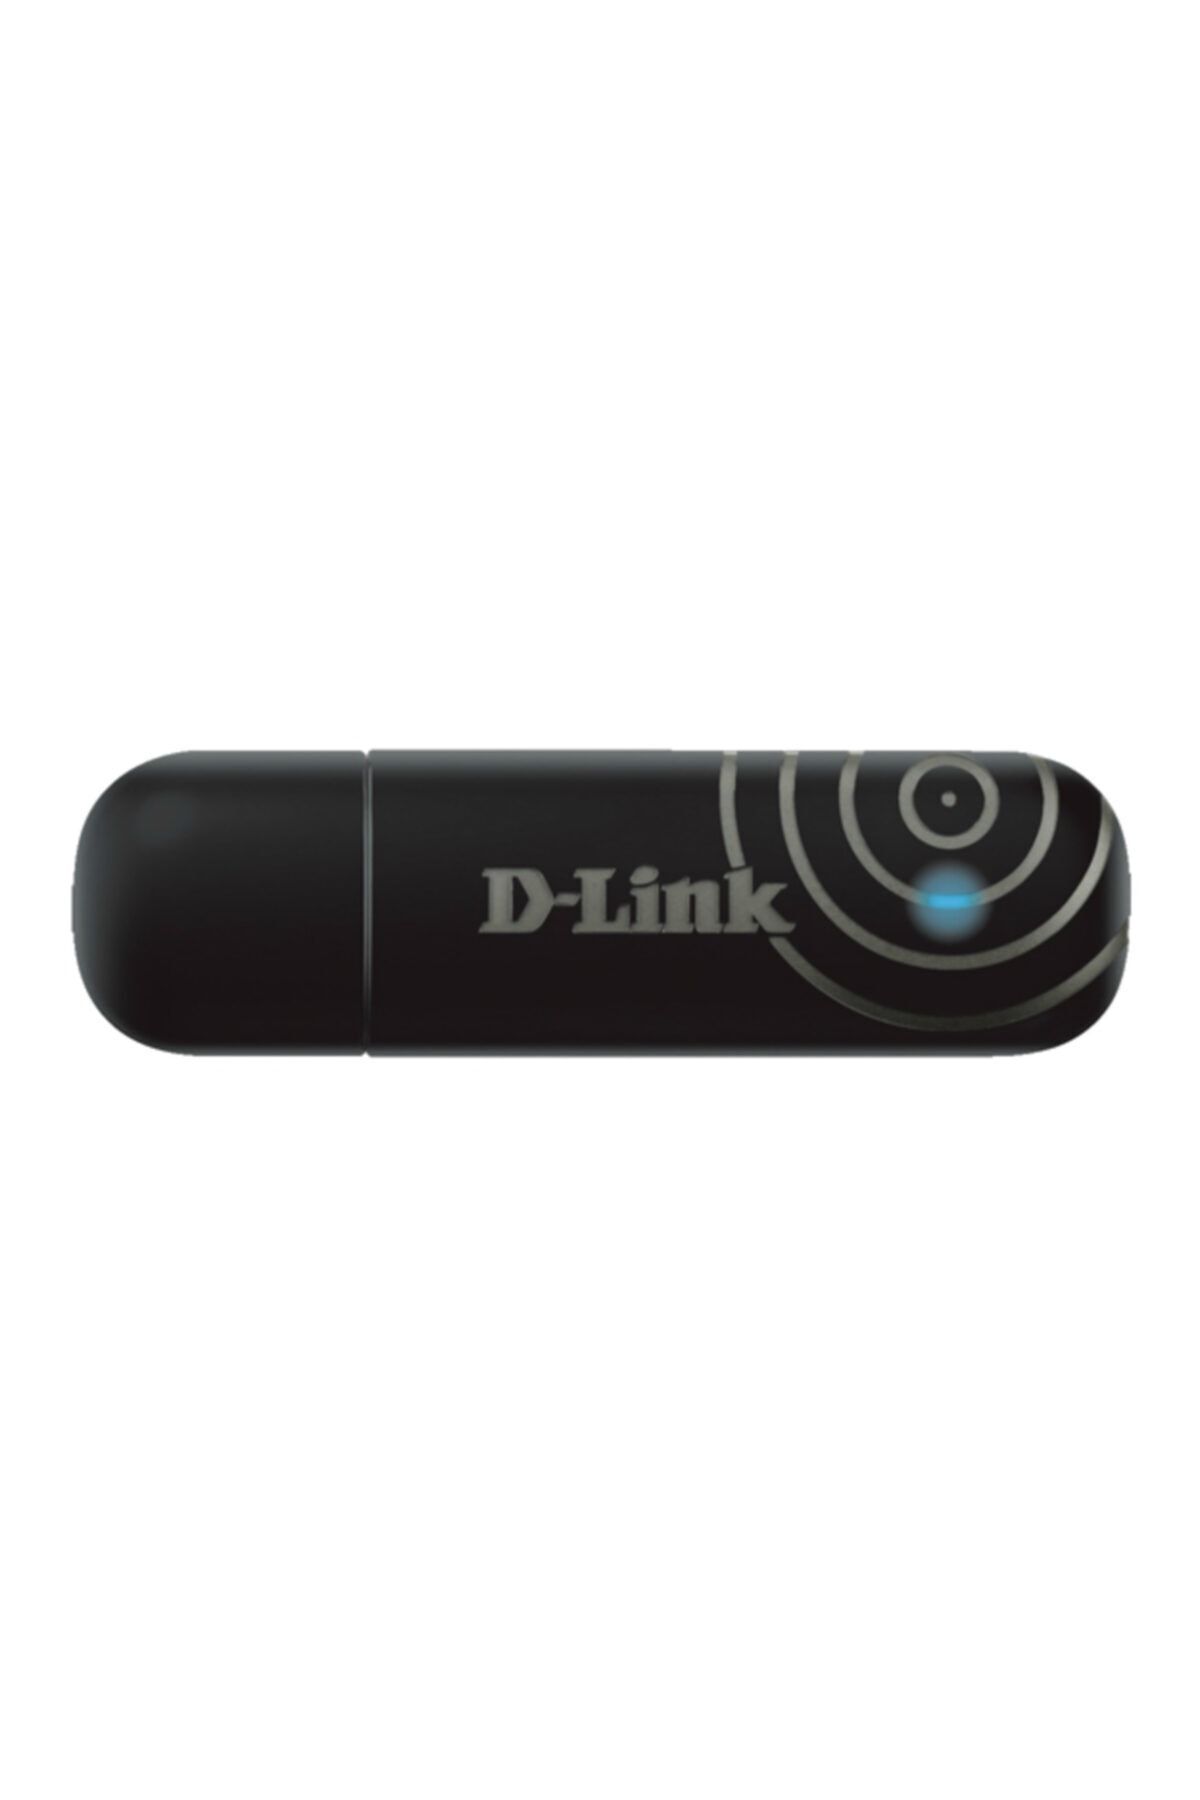 D-Link D-lınk Dwa-140 Wireless Adaptör Kablosuz Ağ Pc Wifi Alıcı Usb Internet Rangebooster